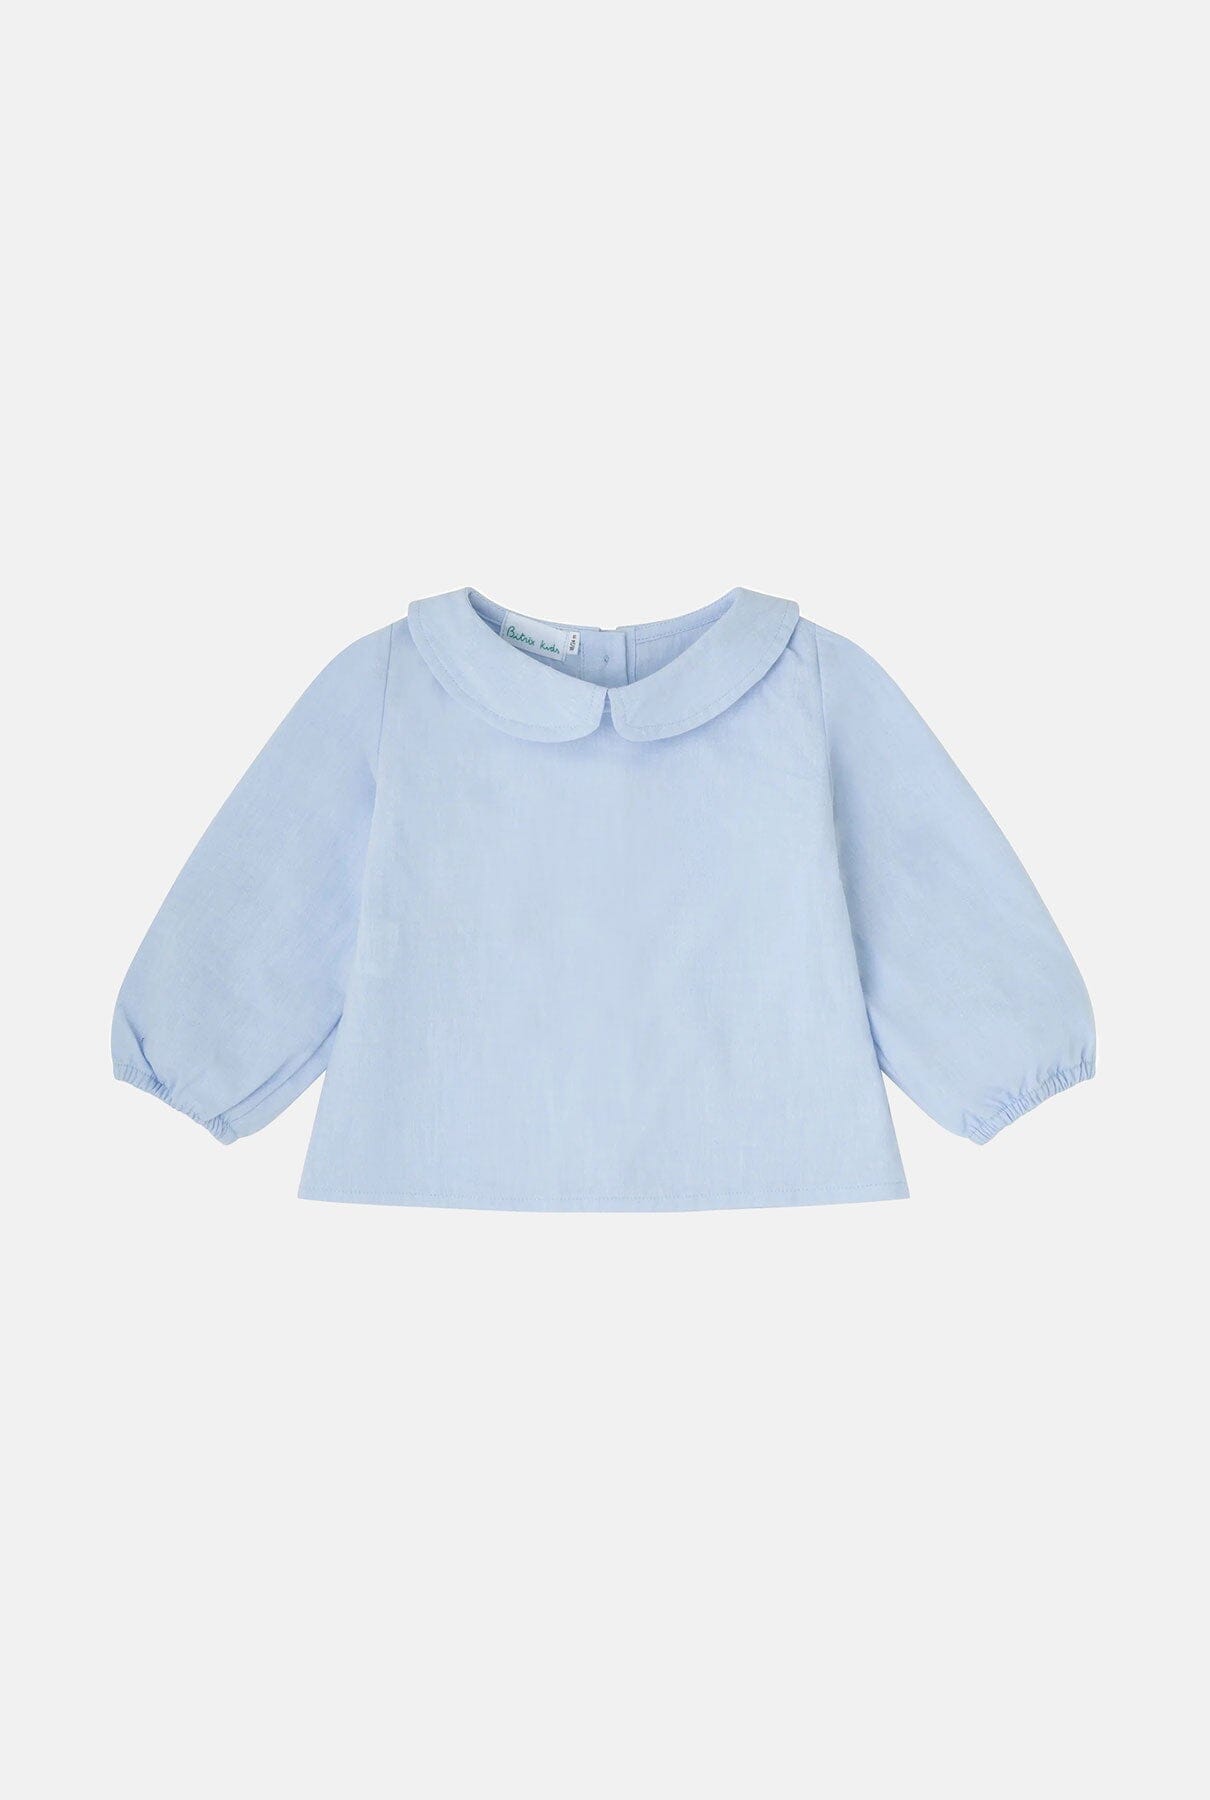 Blusa bebé-Oxford celeste Kids Clothing Bitrix 